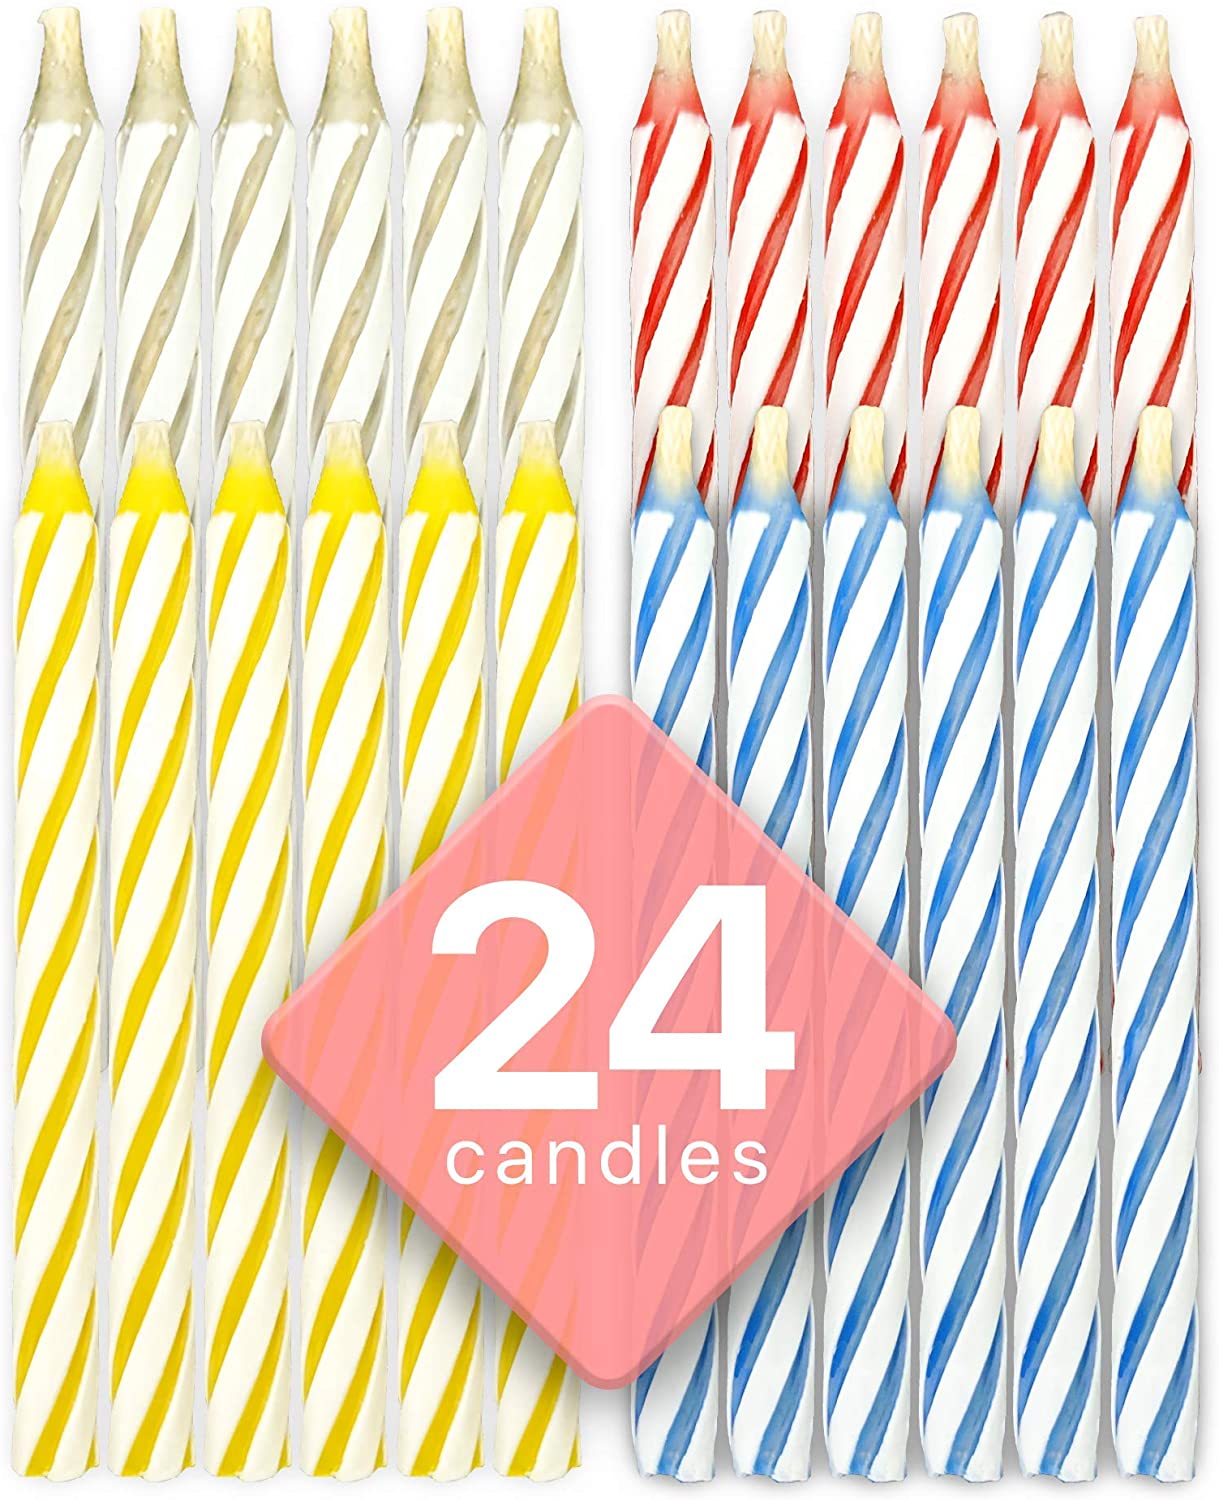 Bundaloo Non-Toxic Trick Birthday Candles For Kids, 24-Piece